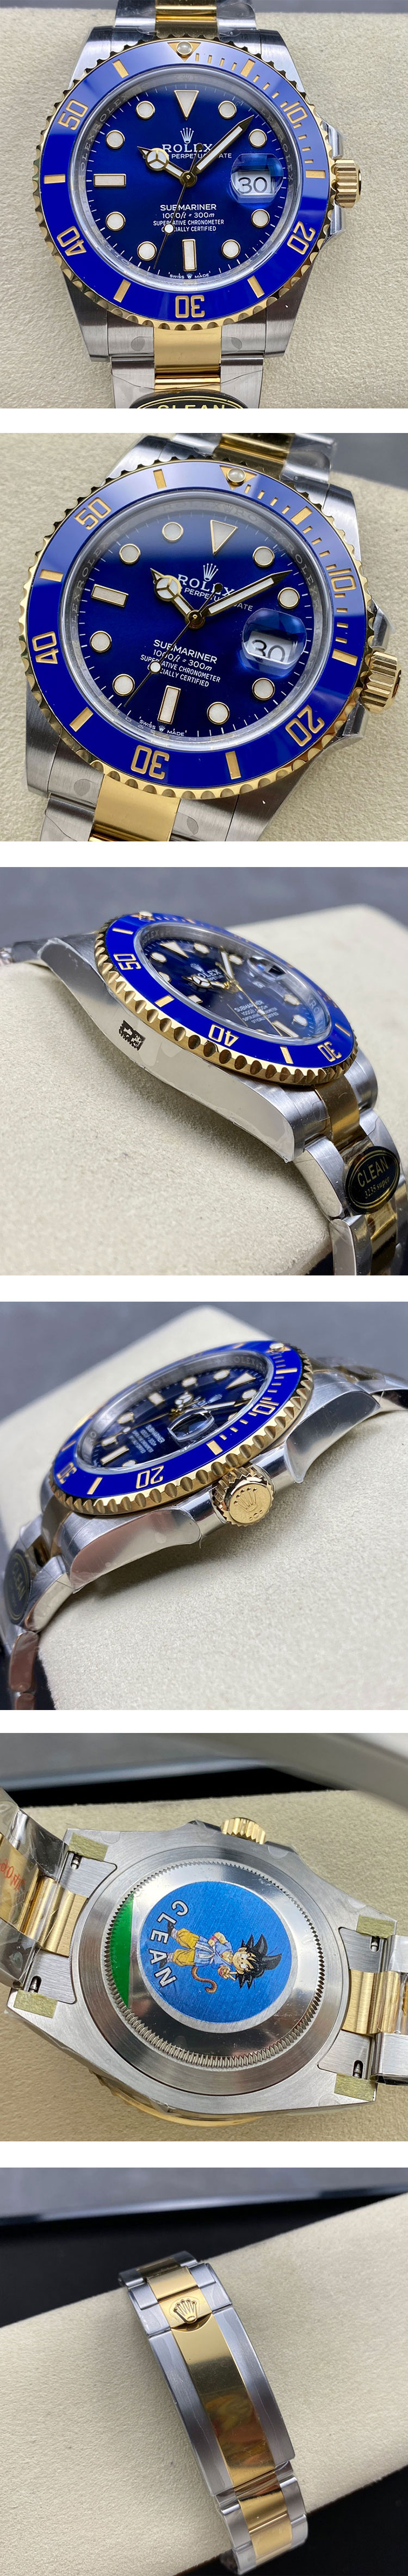 CLEANクリーン製最新品最高級ロレックス偽物コピー時計 サブマリーナーデイト 126613LB メンズ